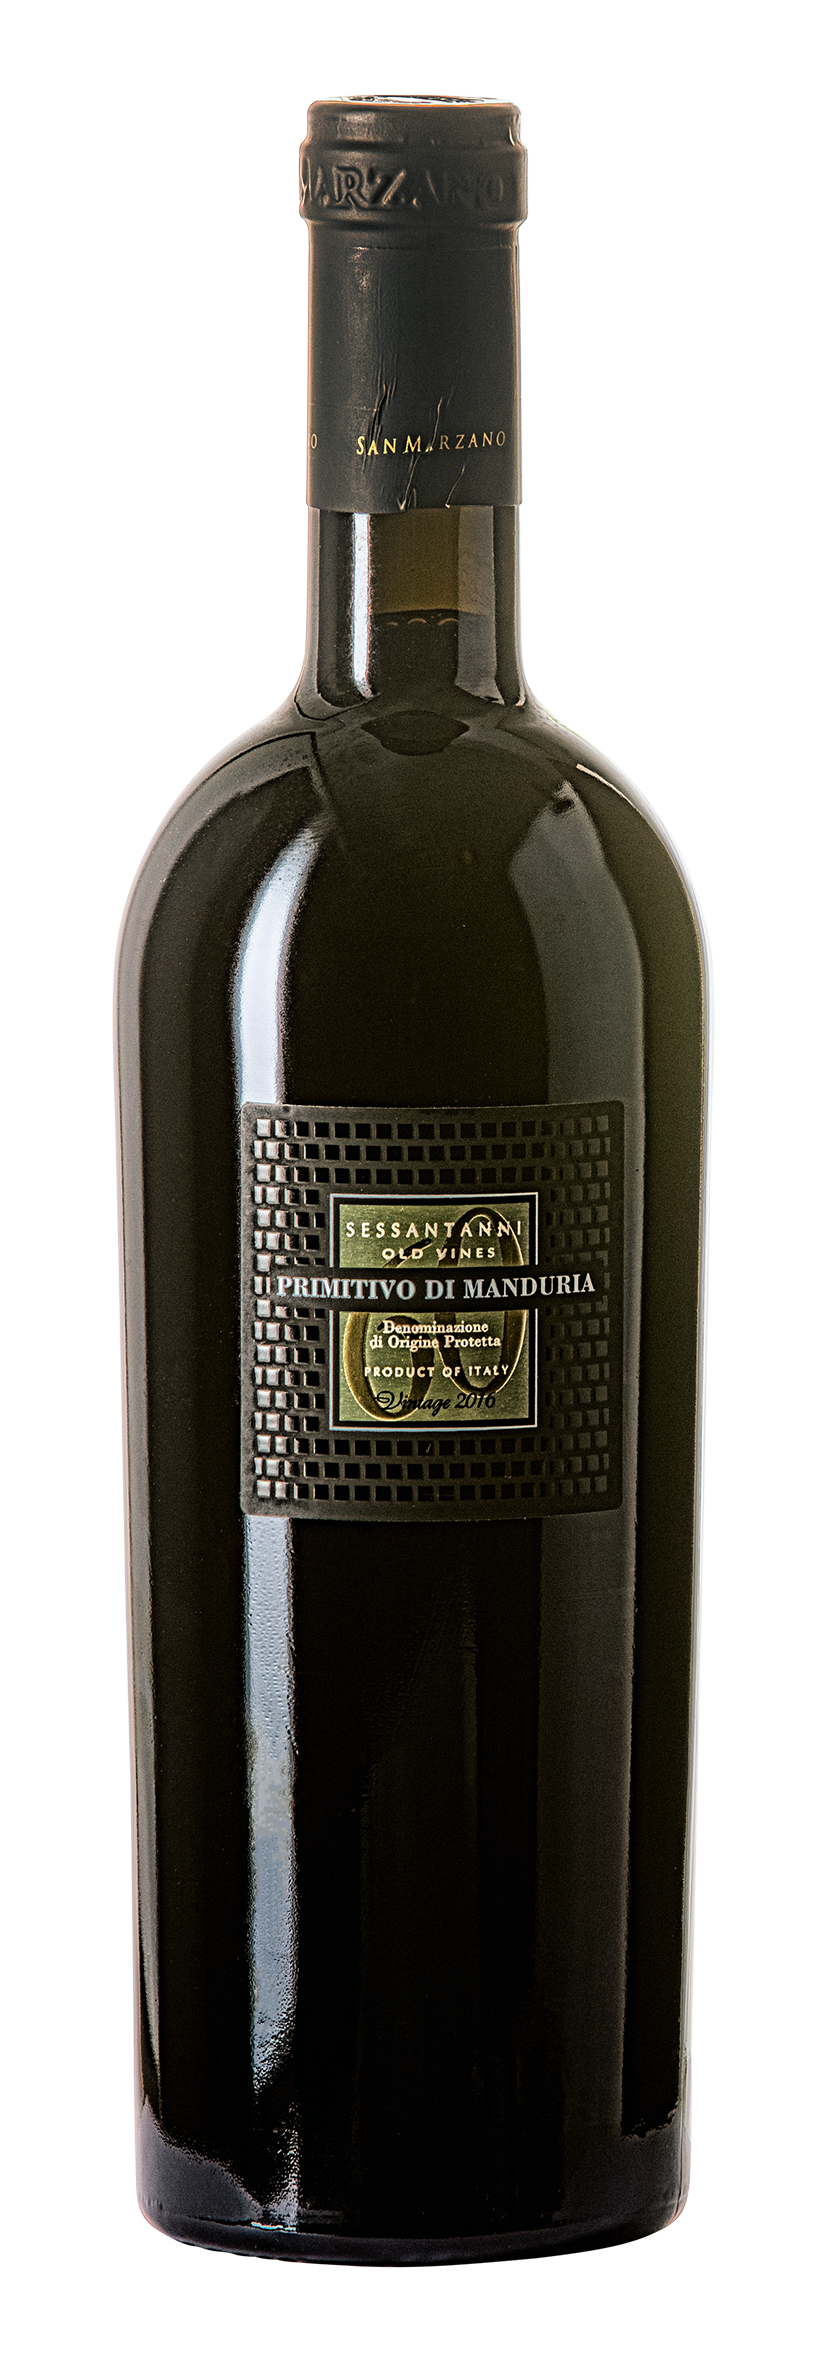 Primitivo di Manduria DOP SESSANTANNI Old Wines 2016